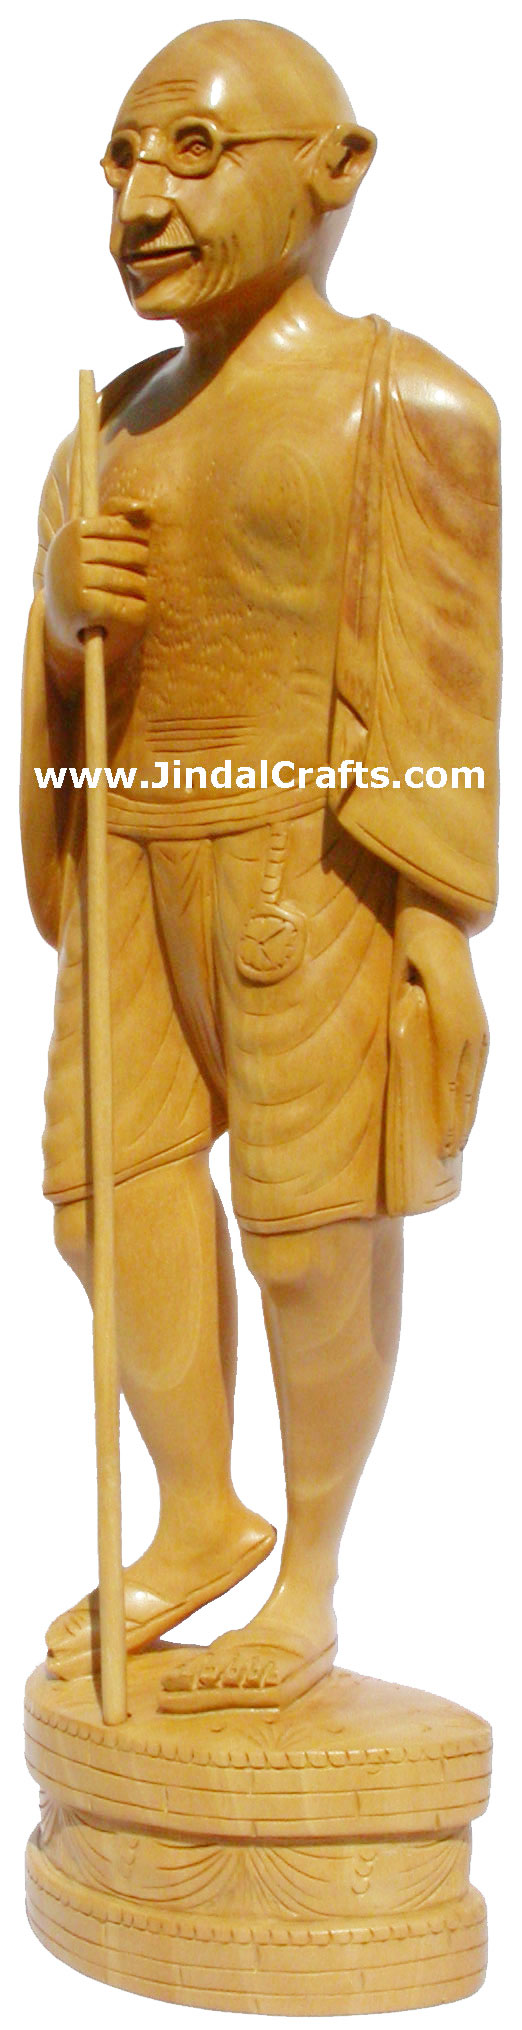 Hand Carved Wooden Mahatma Gandhi Statue Indian Art Work Sculpture Figurine Art